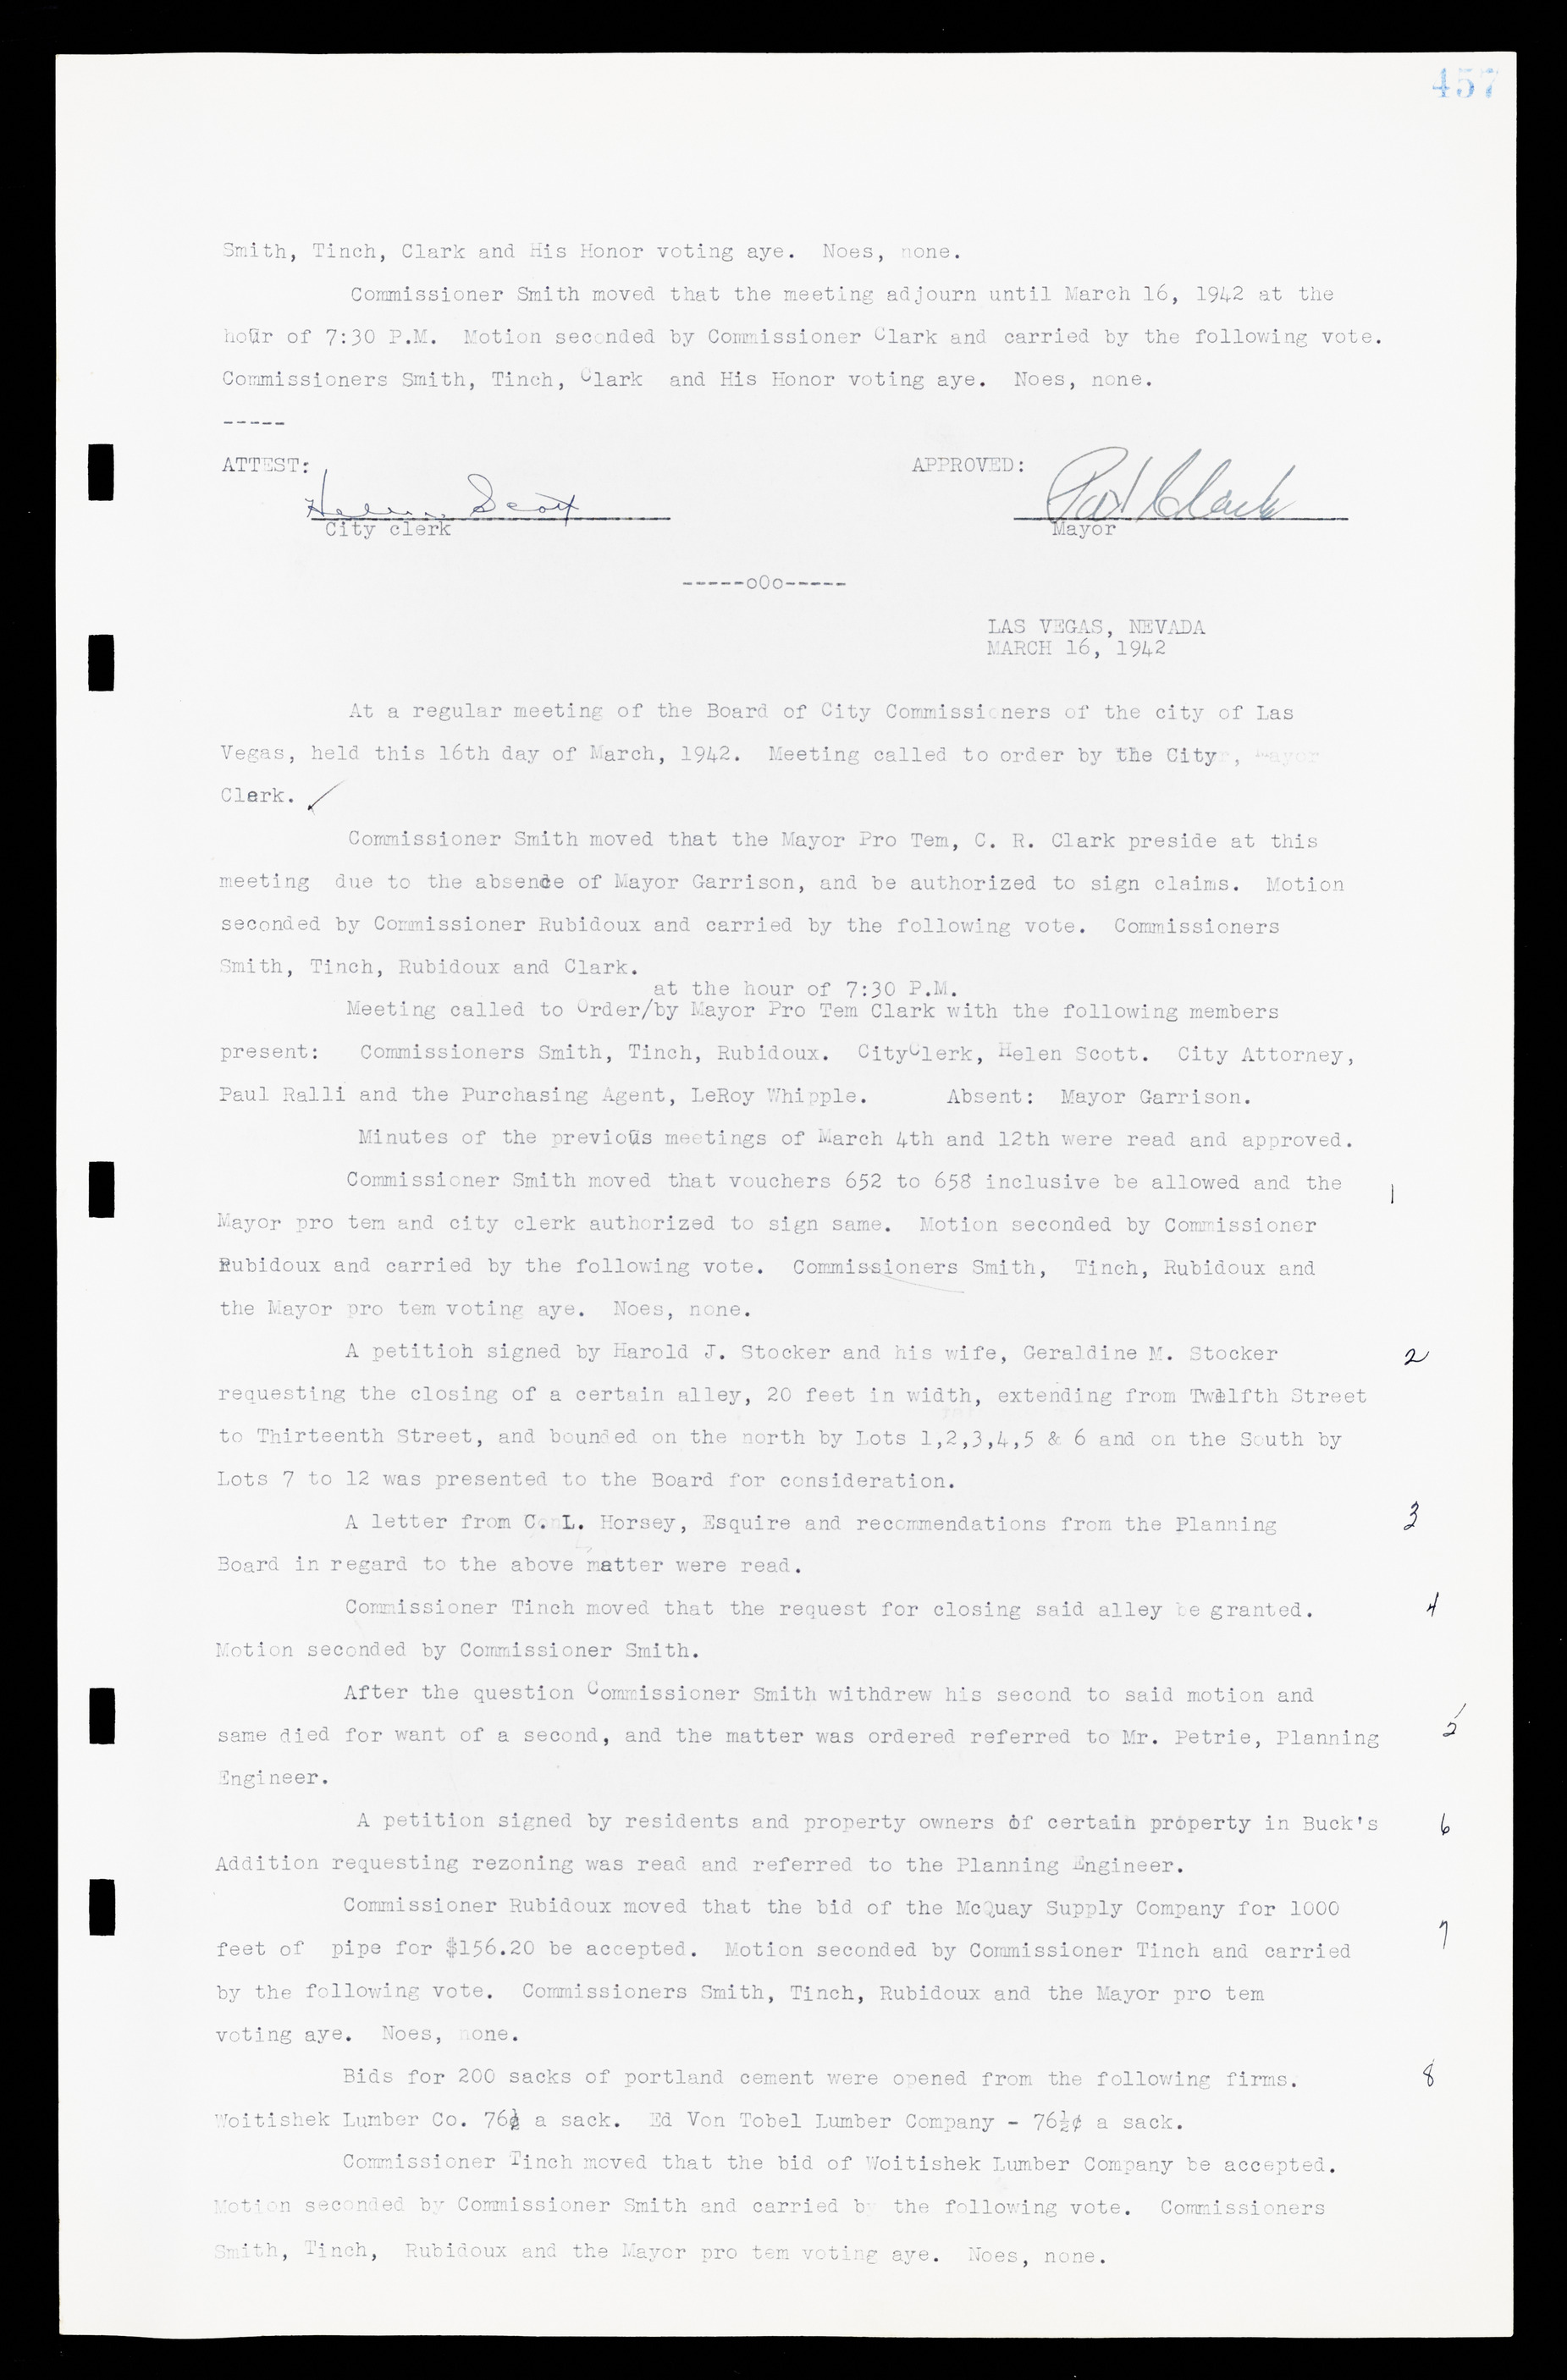 Las Vegas City Commission Minutes, February 17, 1937 to August 4, 1942, lvc000004-485